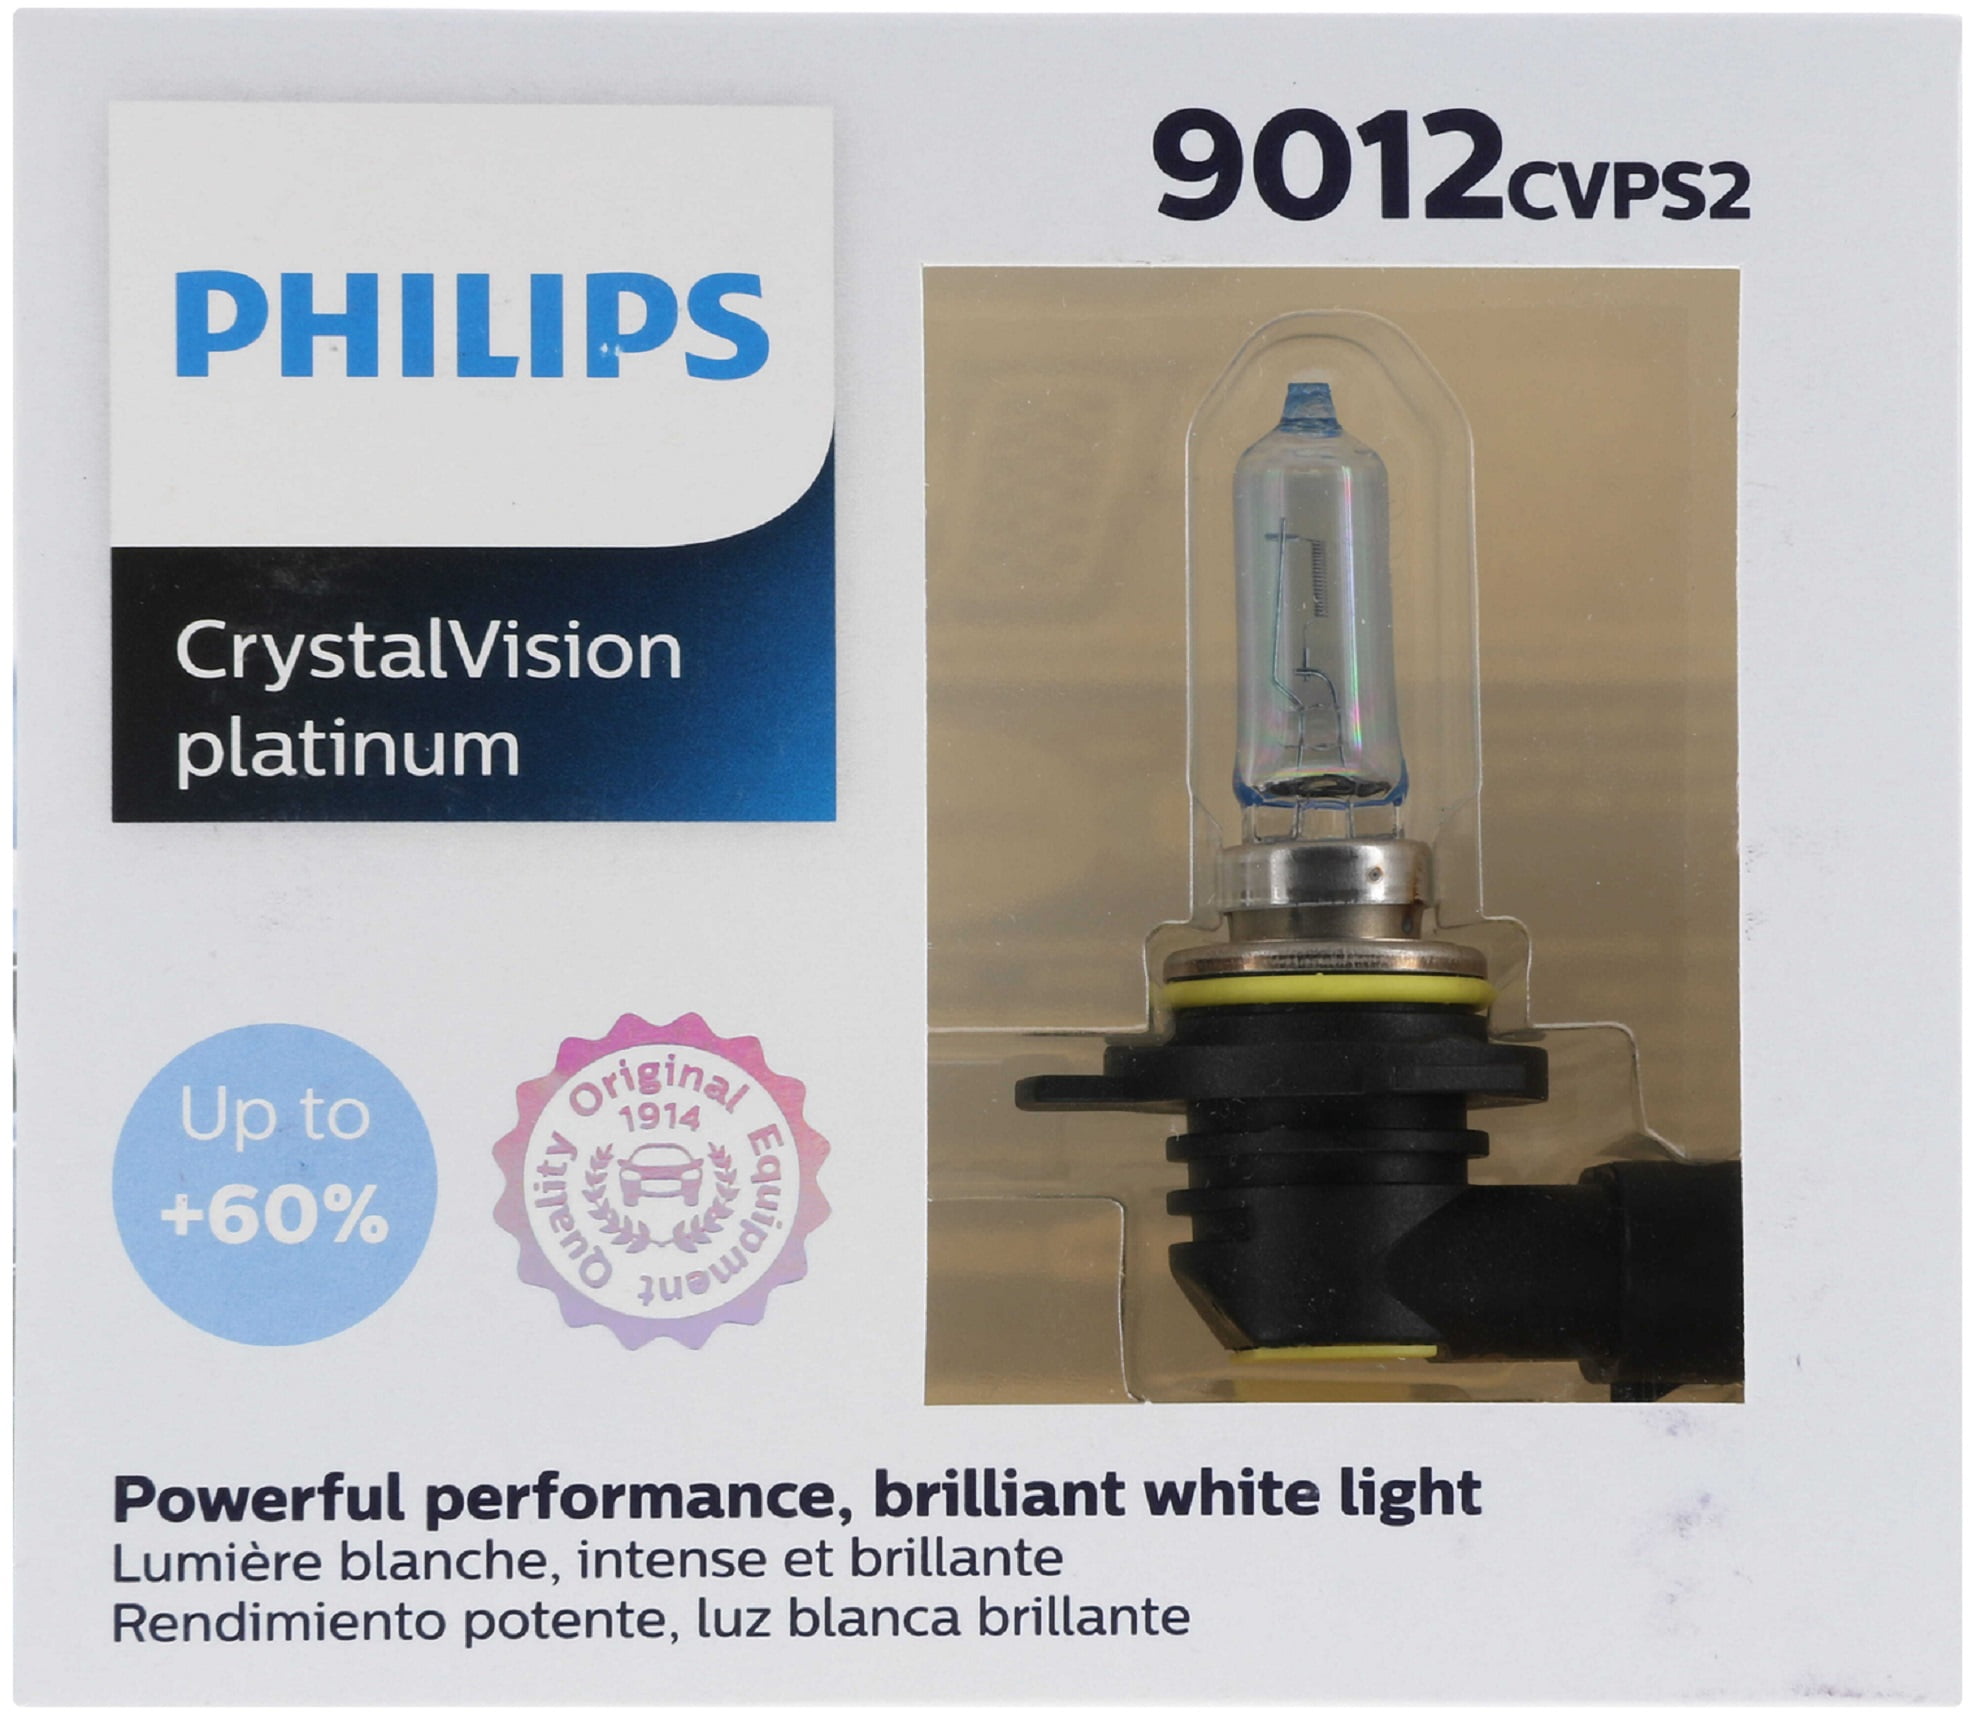 Philips 9012 HIR2 12V 55W Standard Halogen Headlight Bulb, 1 Pack